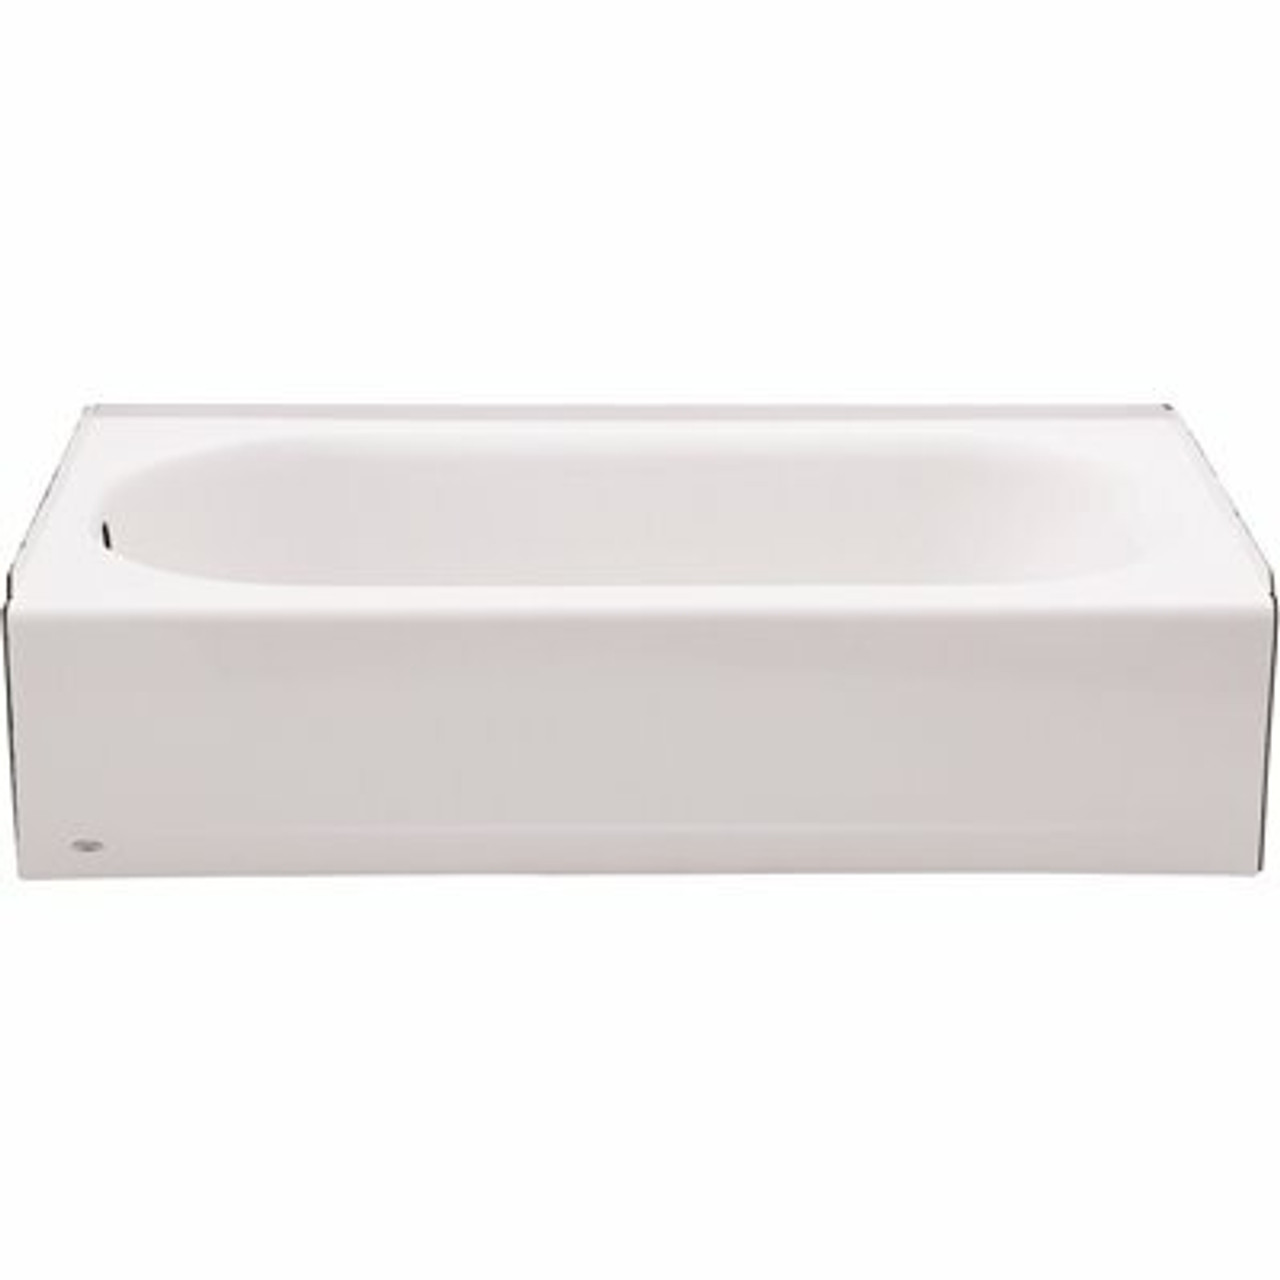 American Standard Princeton 60 In. Left Hand Drain Rectangular Alcove Bathtub In White